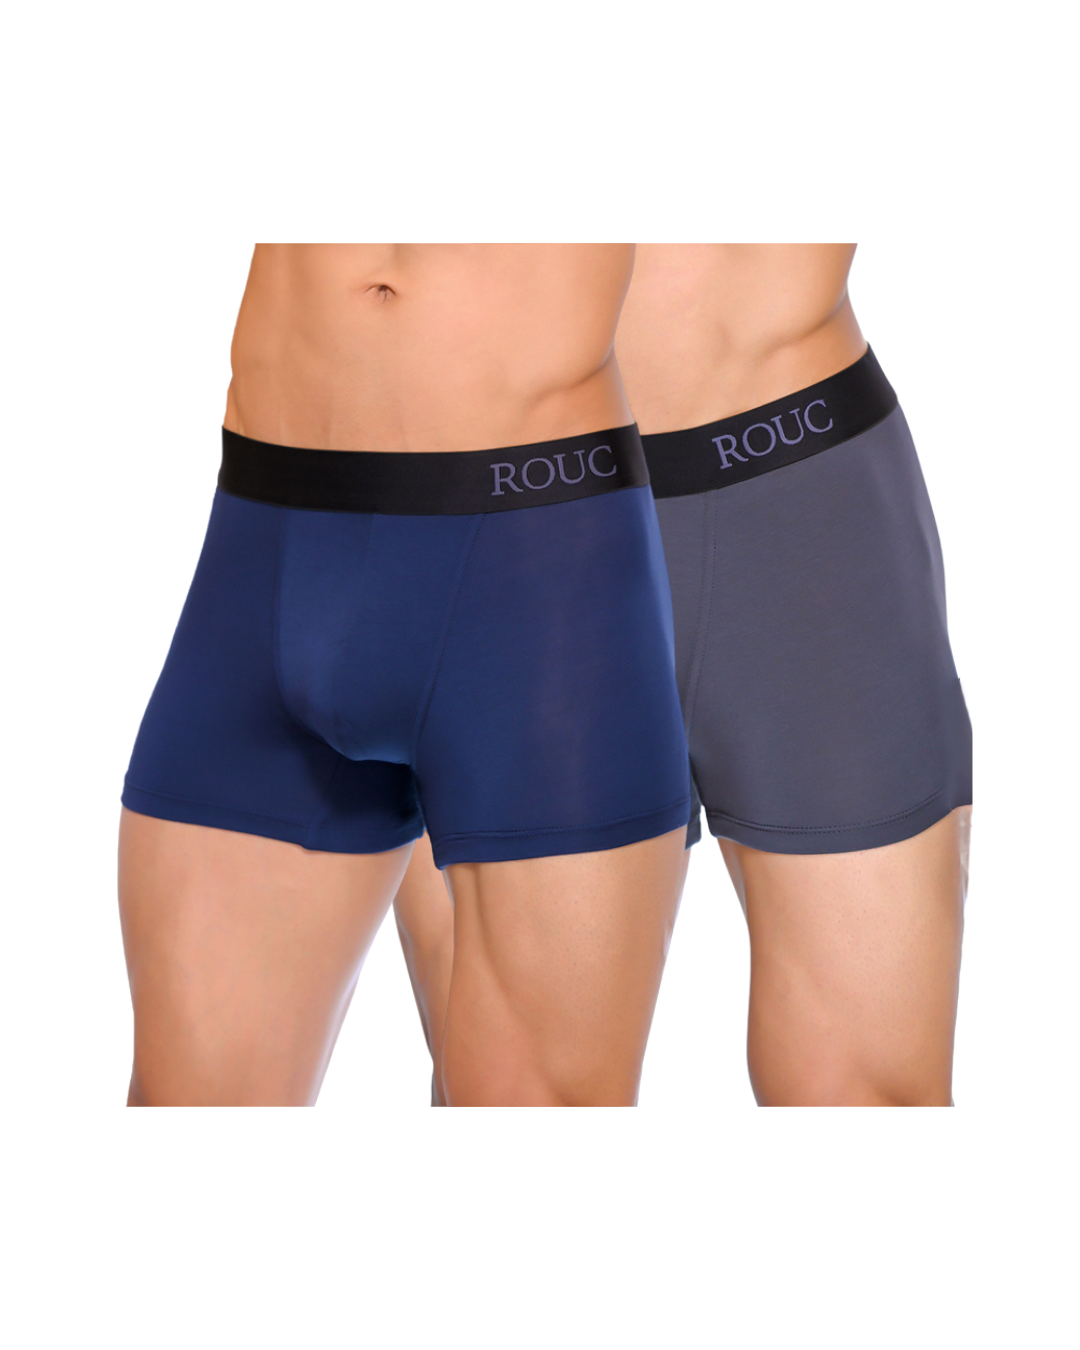 Men Underwear - TRUNKS - 2 Pack (Blue & Grey)